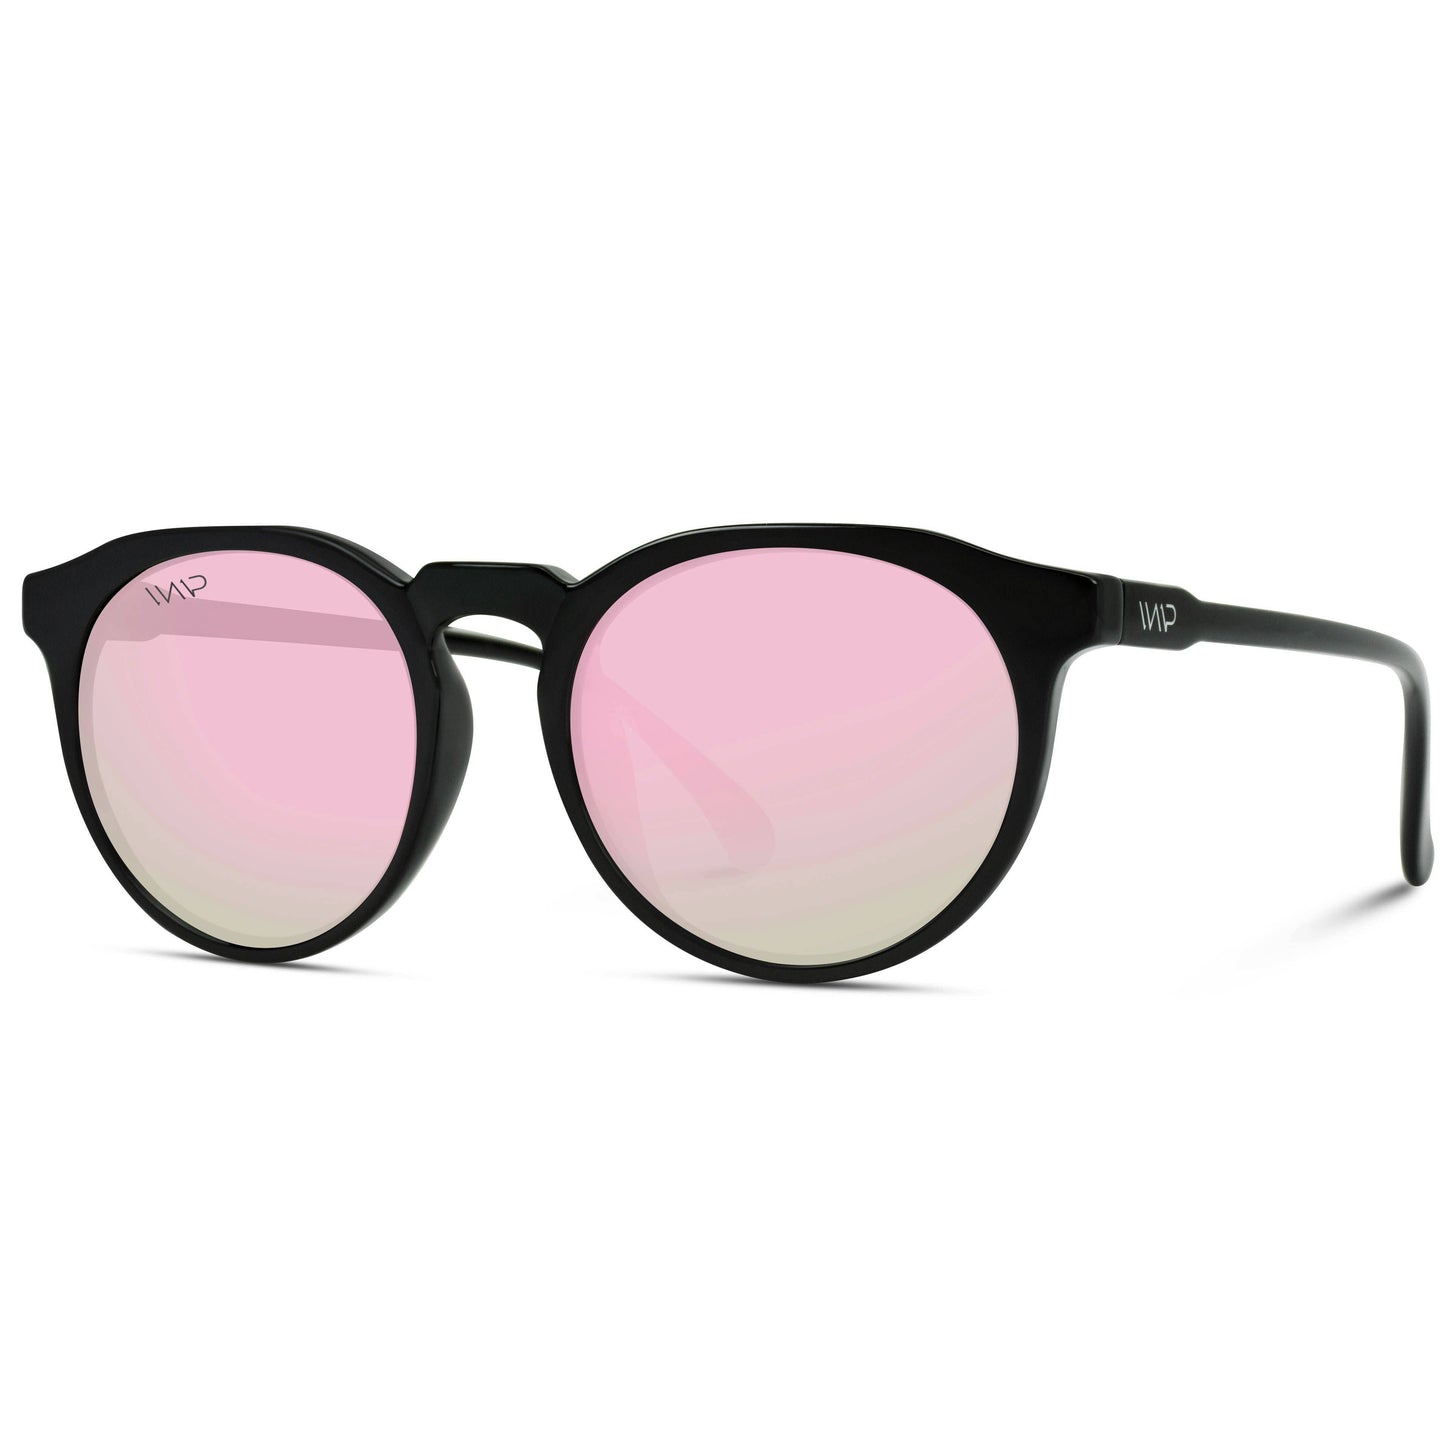 Cameron - Round Retro Flat Top Mirrored Unisex Sunglasses | Black and Pink